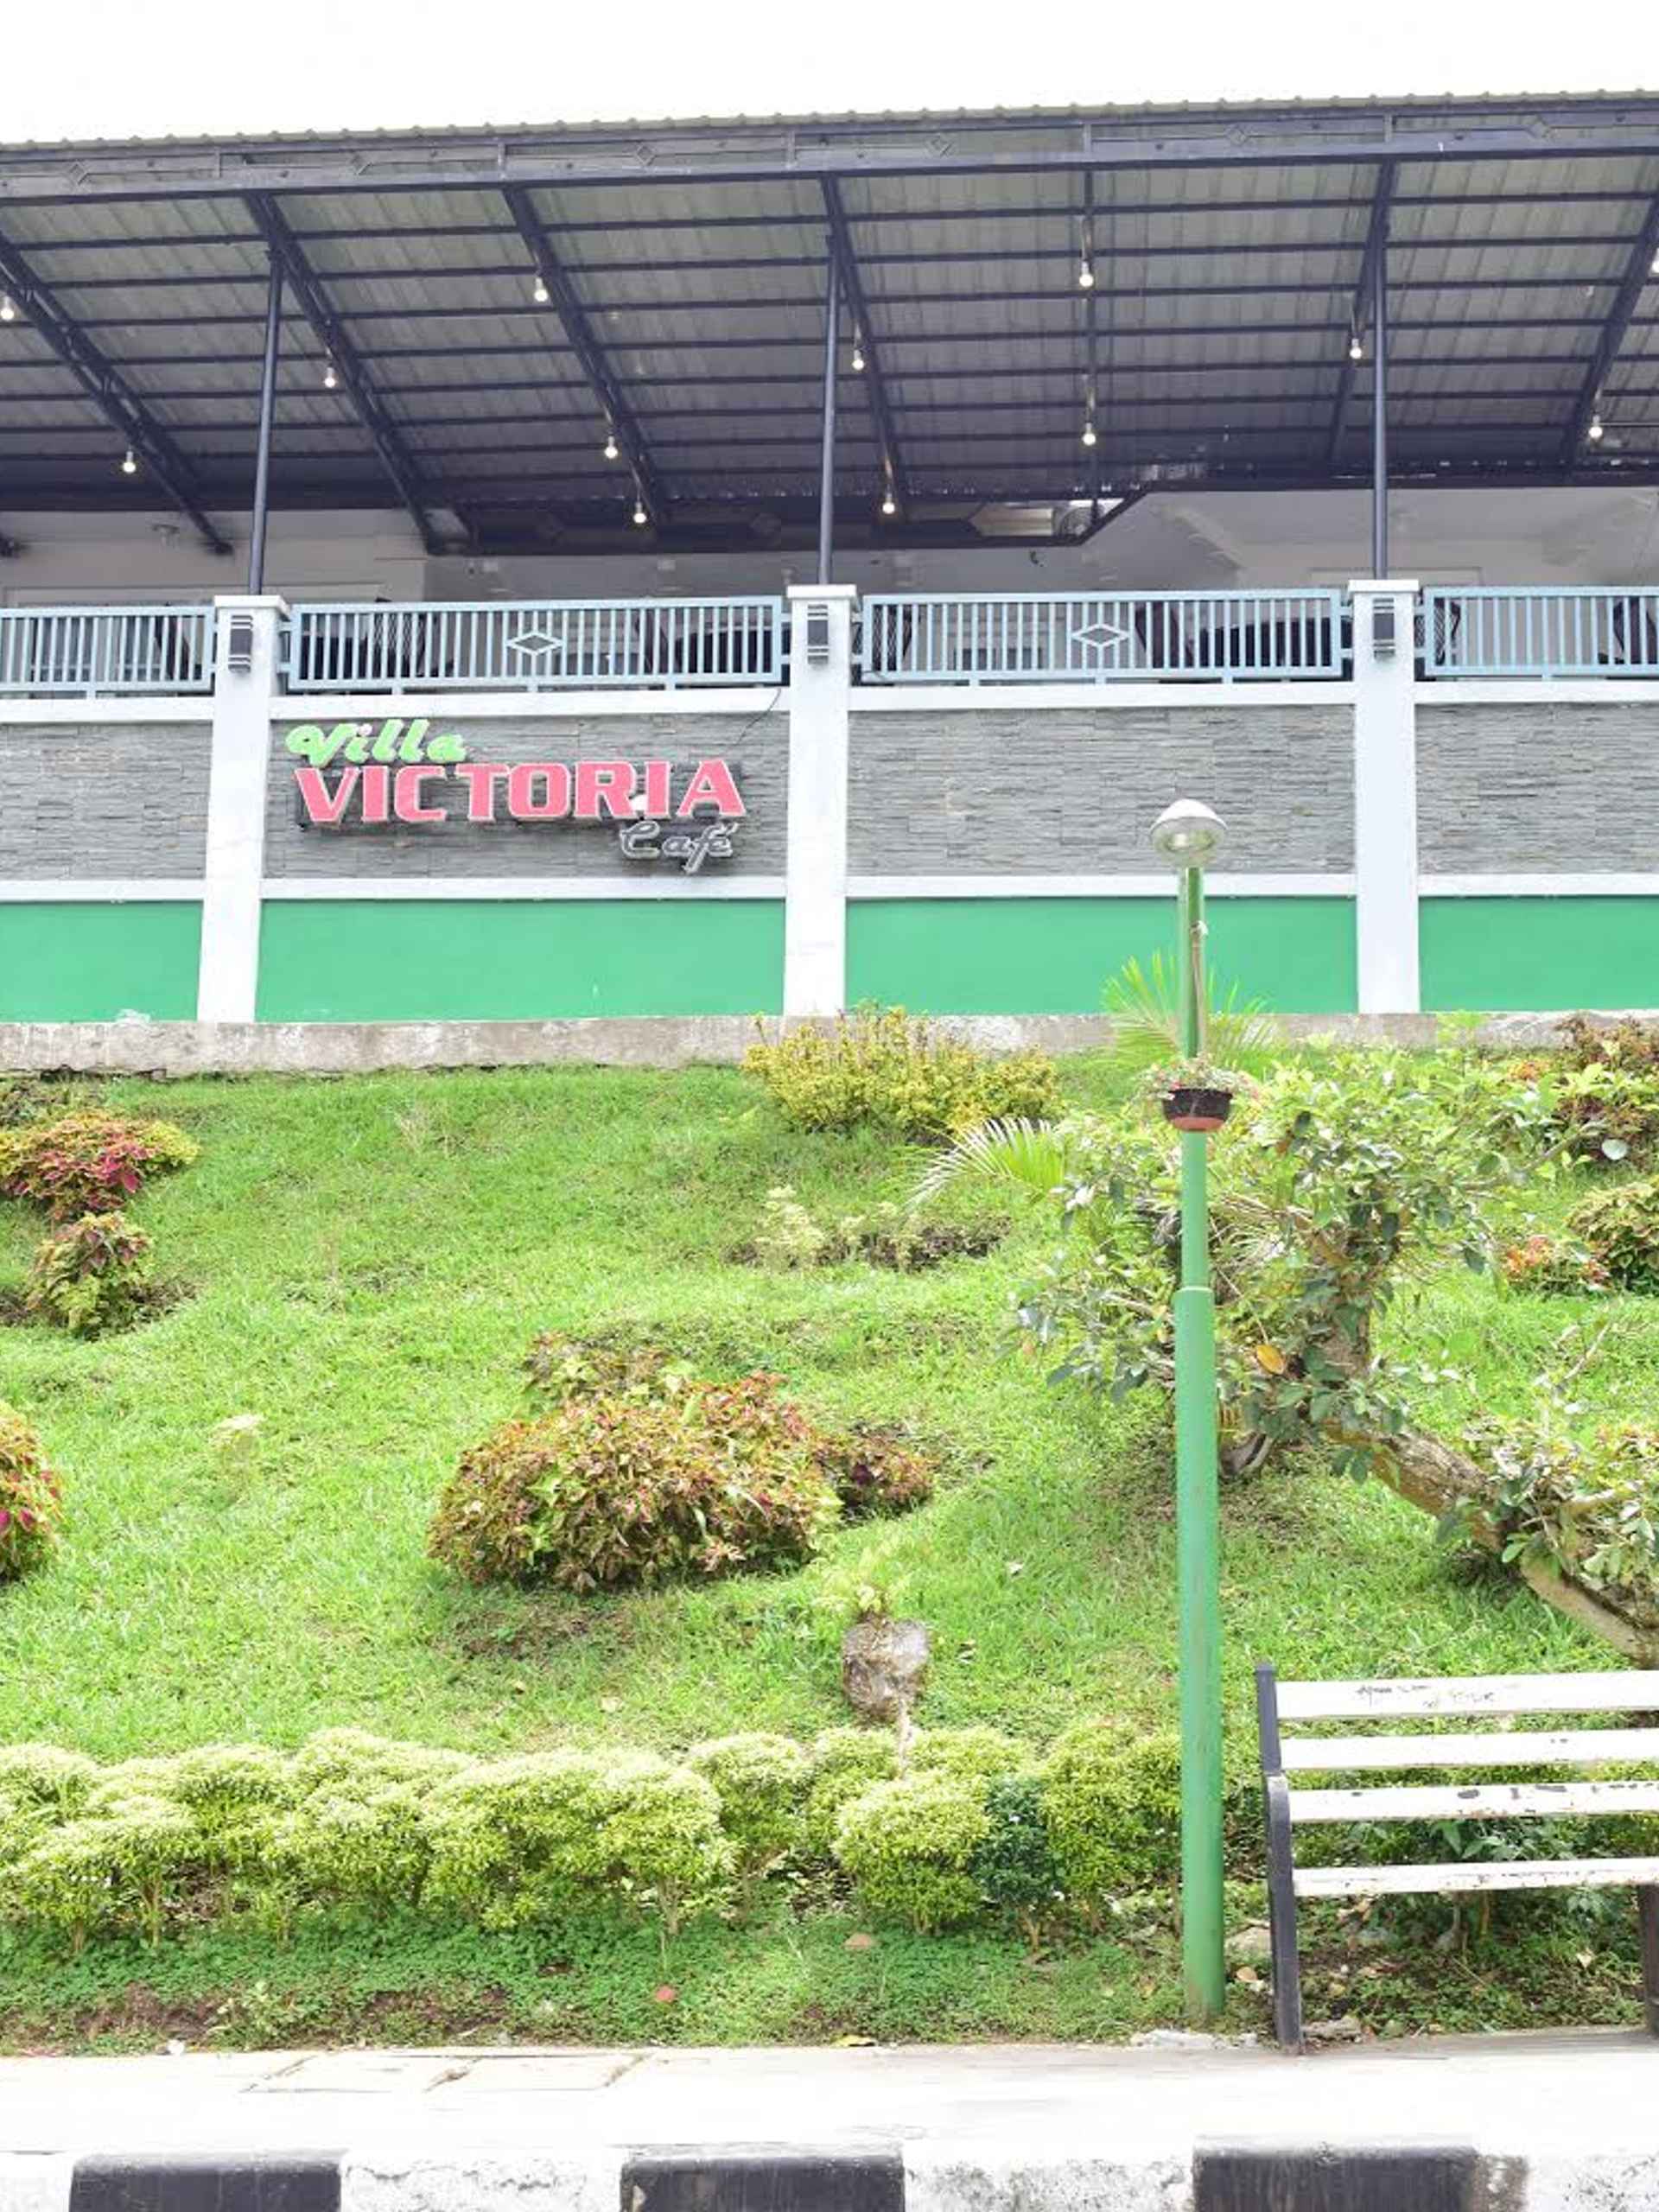 Exterior Villa Victoria Cafe